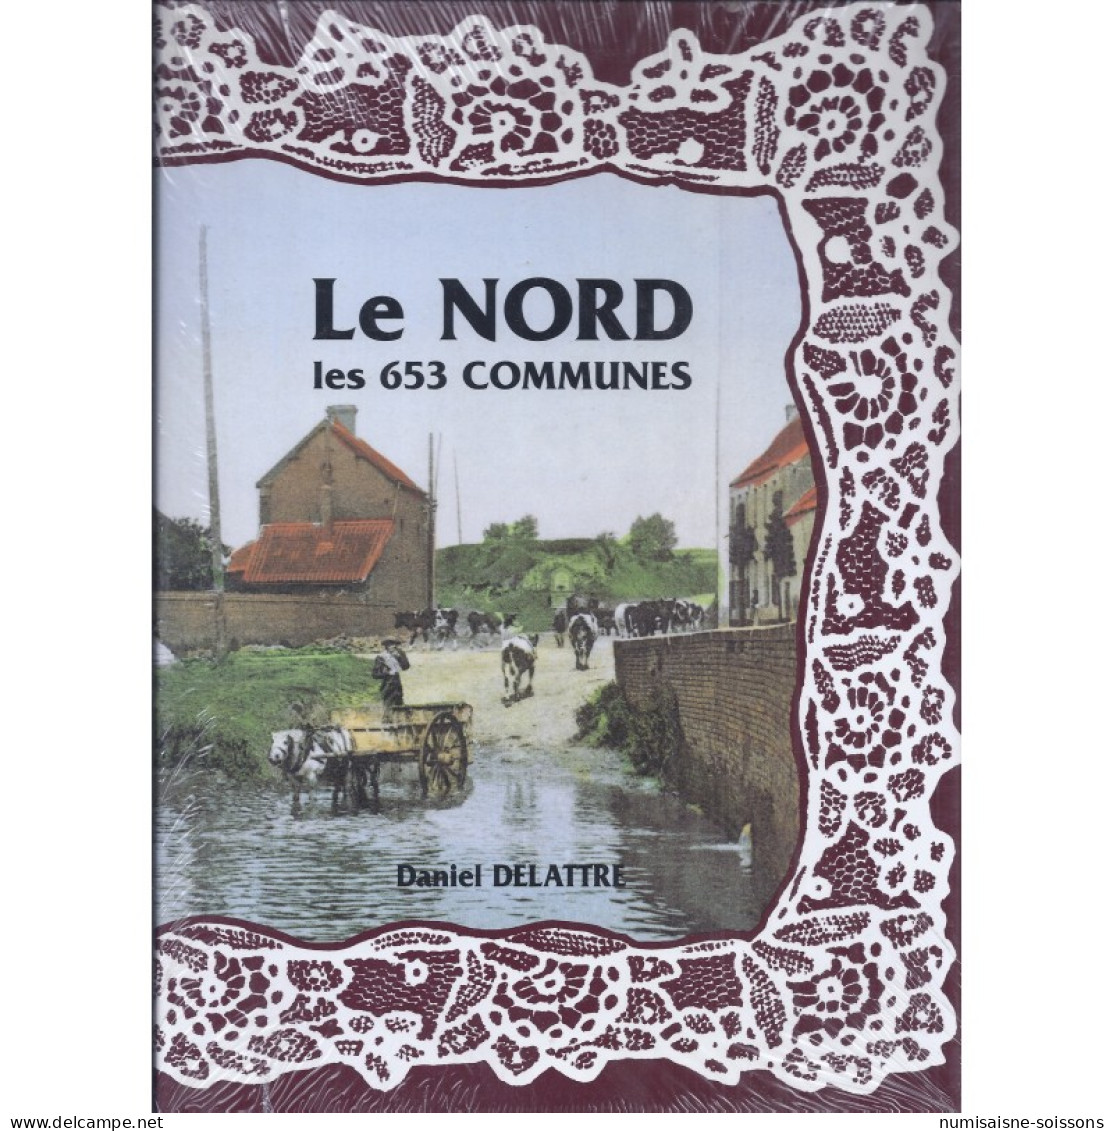 Cartes Postales - Le NORD - Les 653 Communes - Daniel Delattre - Livres Anciens